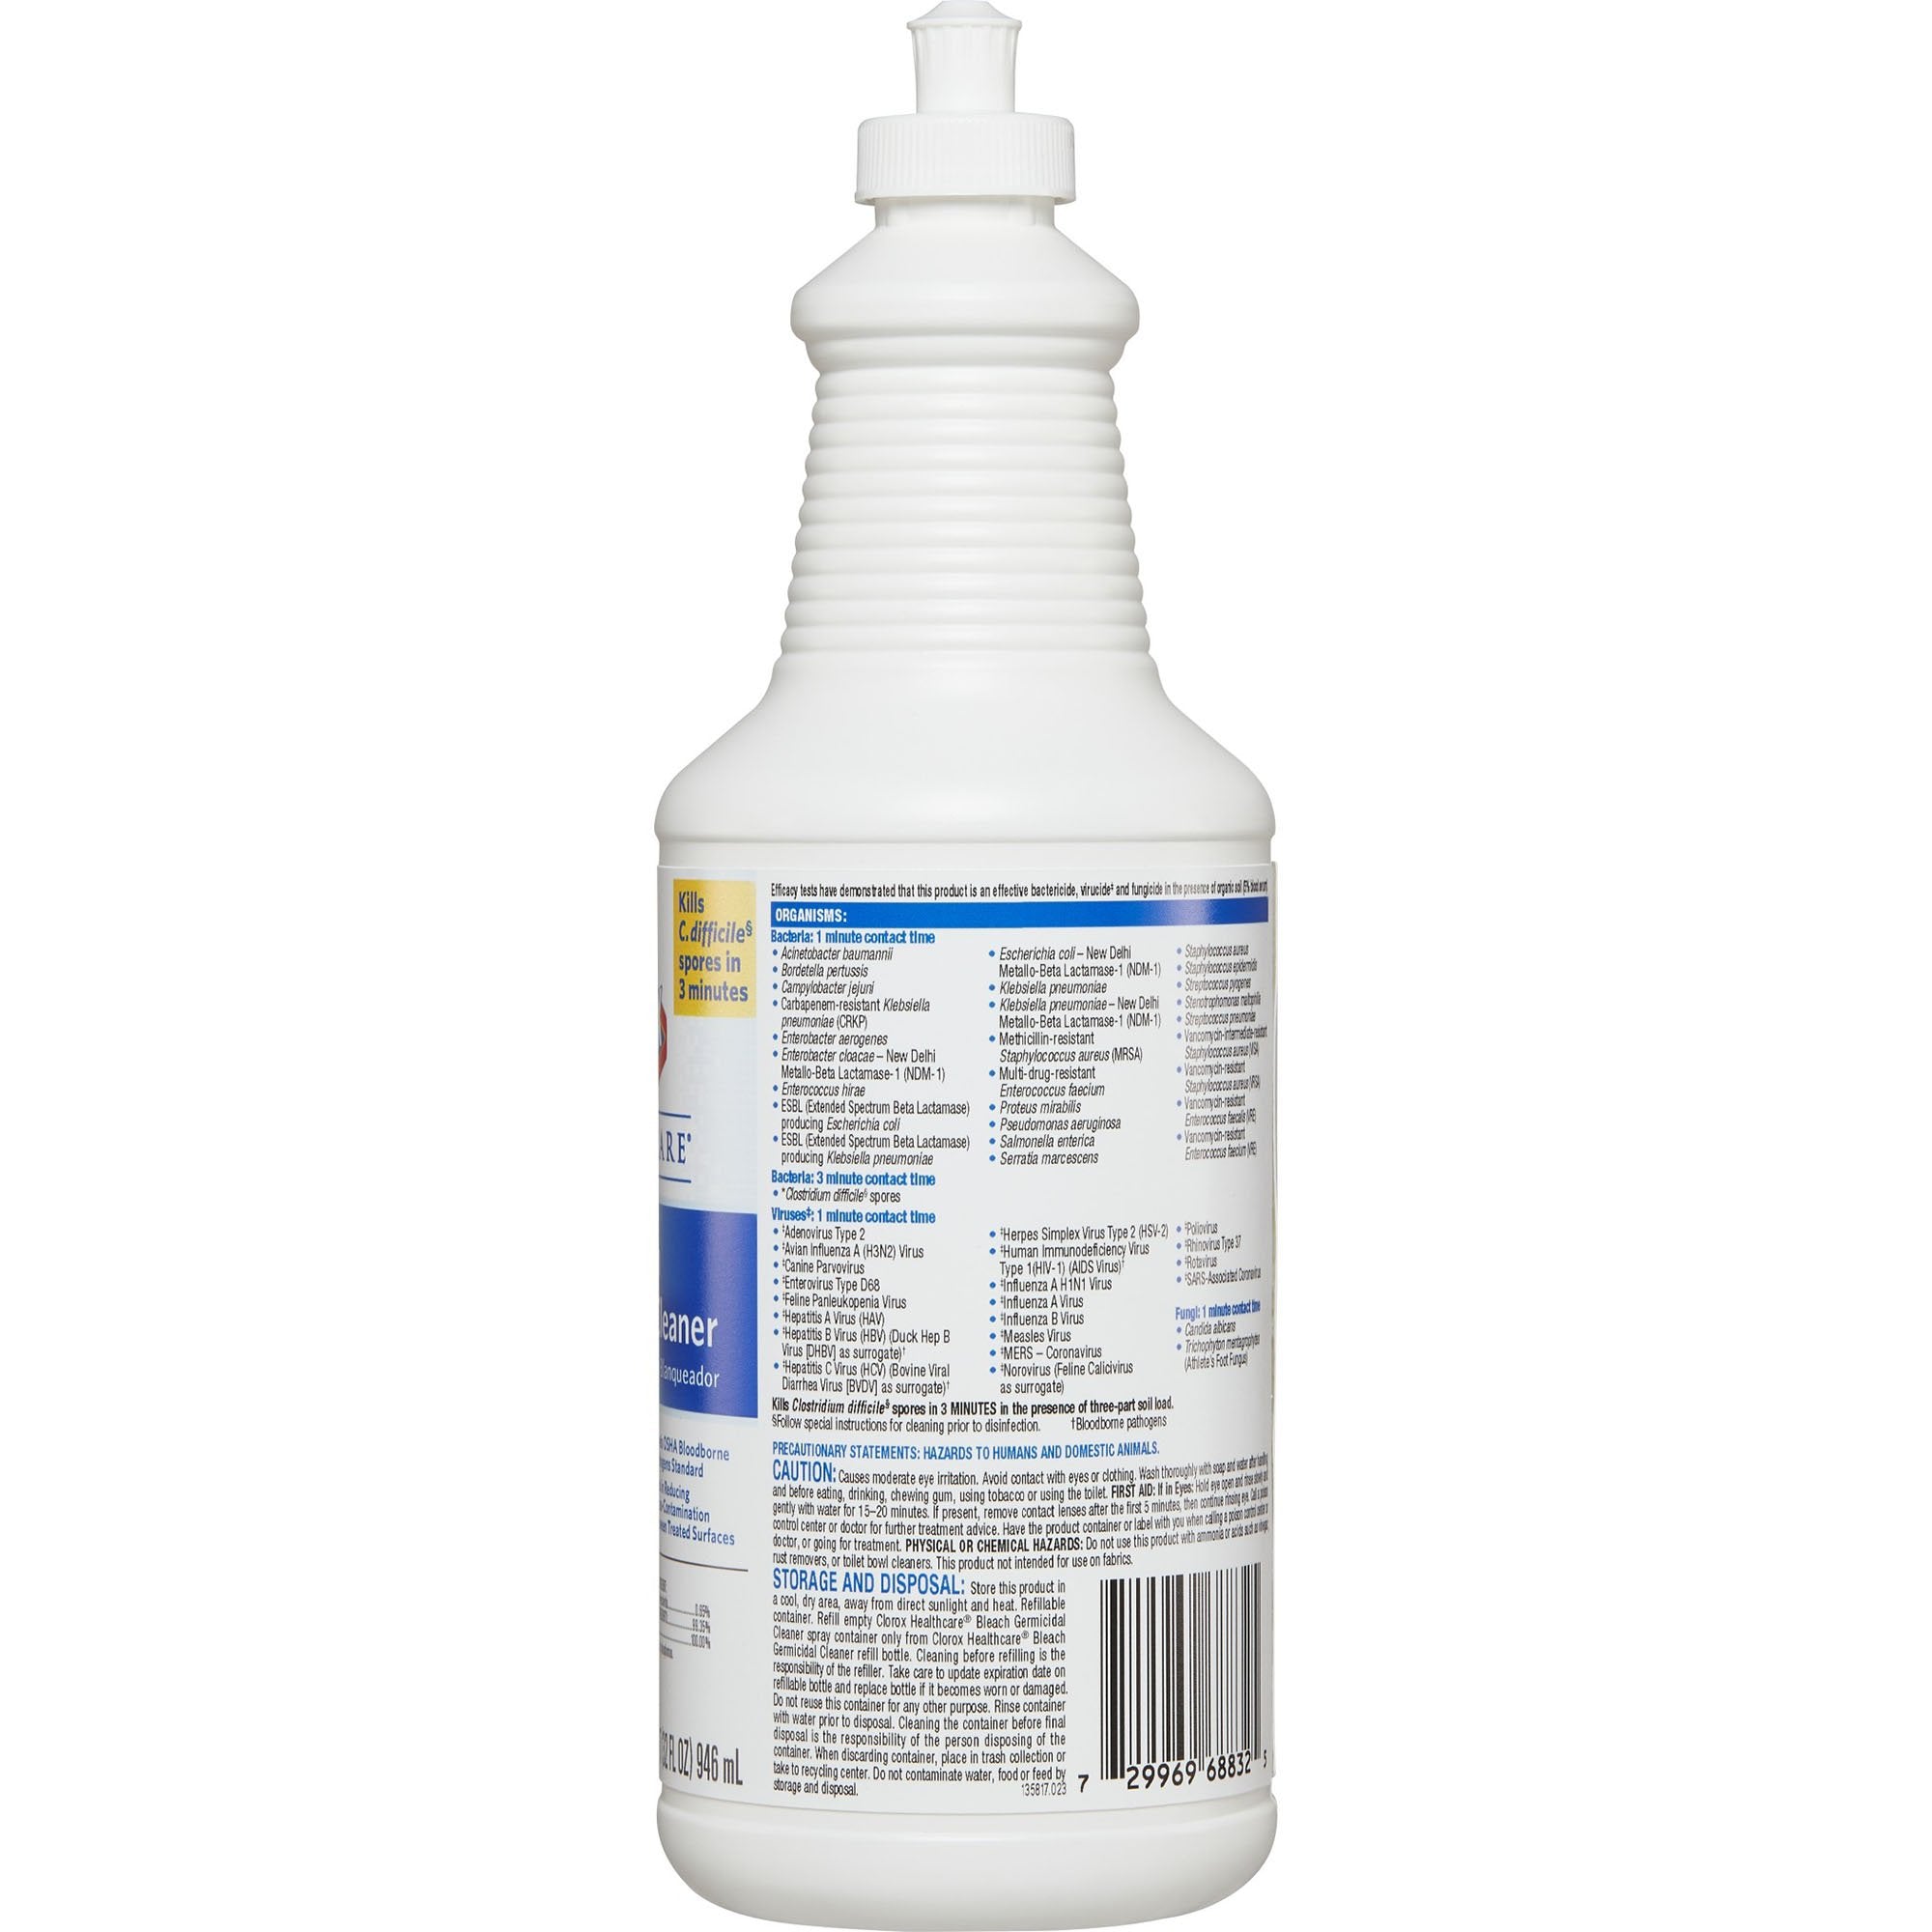 Clorox Healthcare Bleach Germicidal Surface Disinfectant Cleaner Manual Squeeze Liquid 32 oz. Bottle Fruity Floral Bleach Scent NonSterile